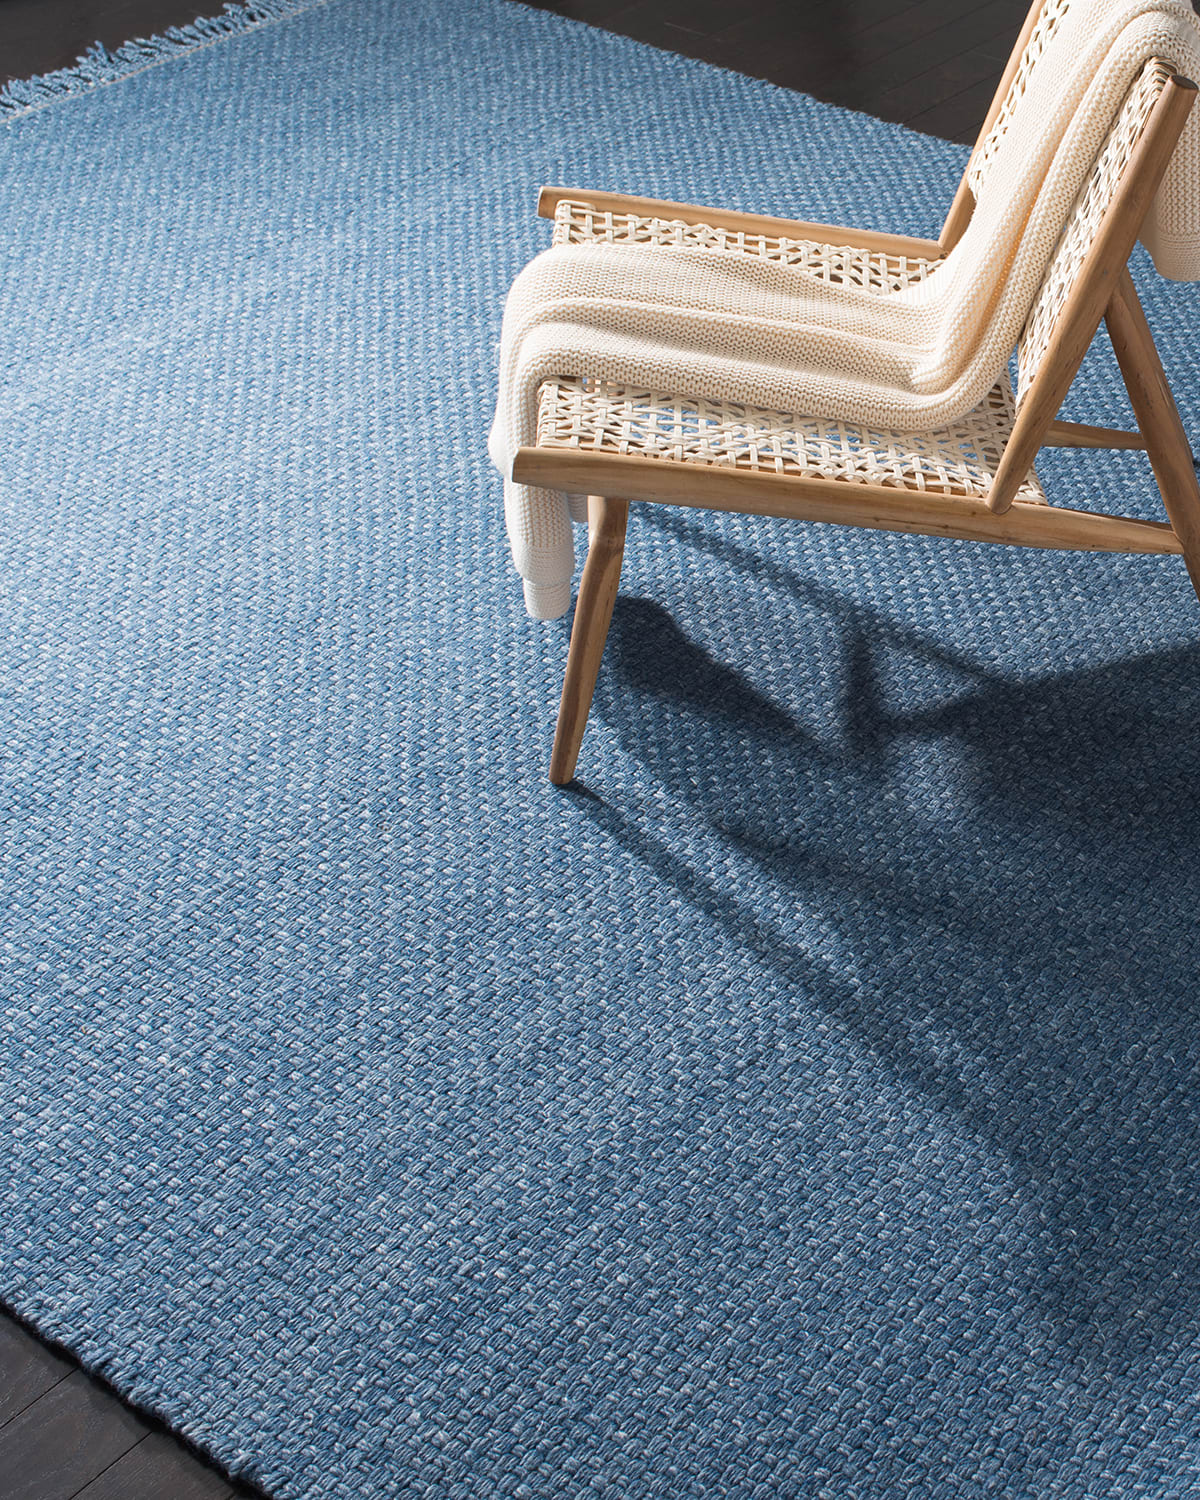 Amalie Blue Hand-Woven Flat Weave Rug, 5' x 8'